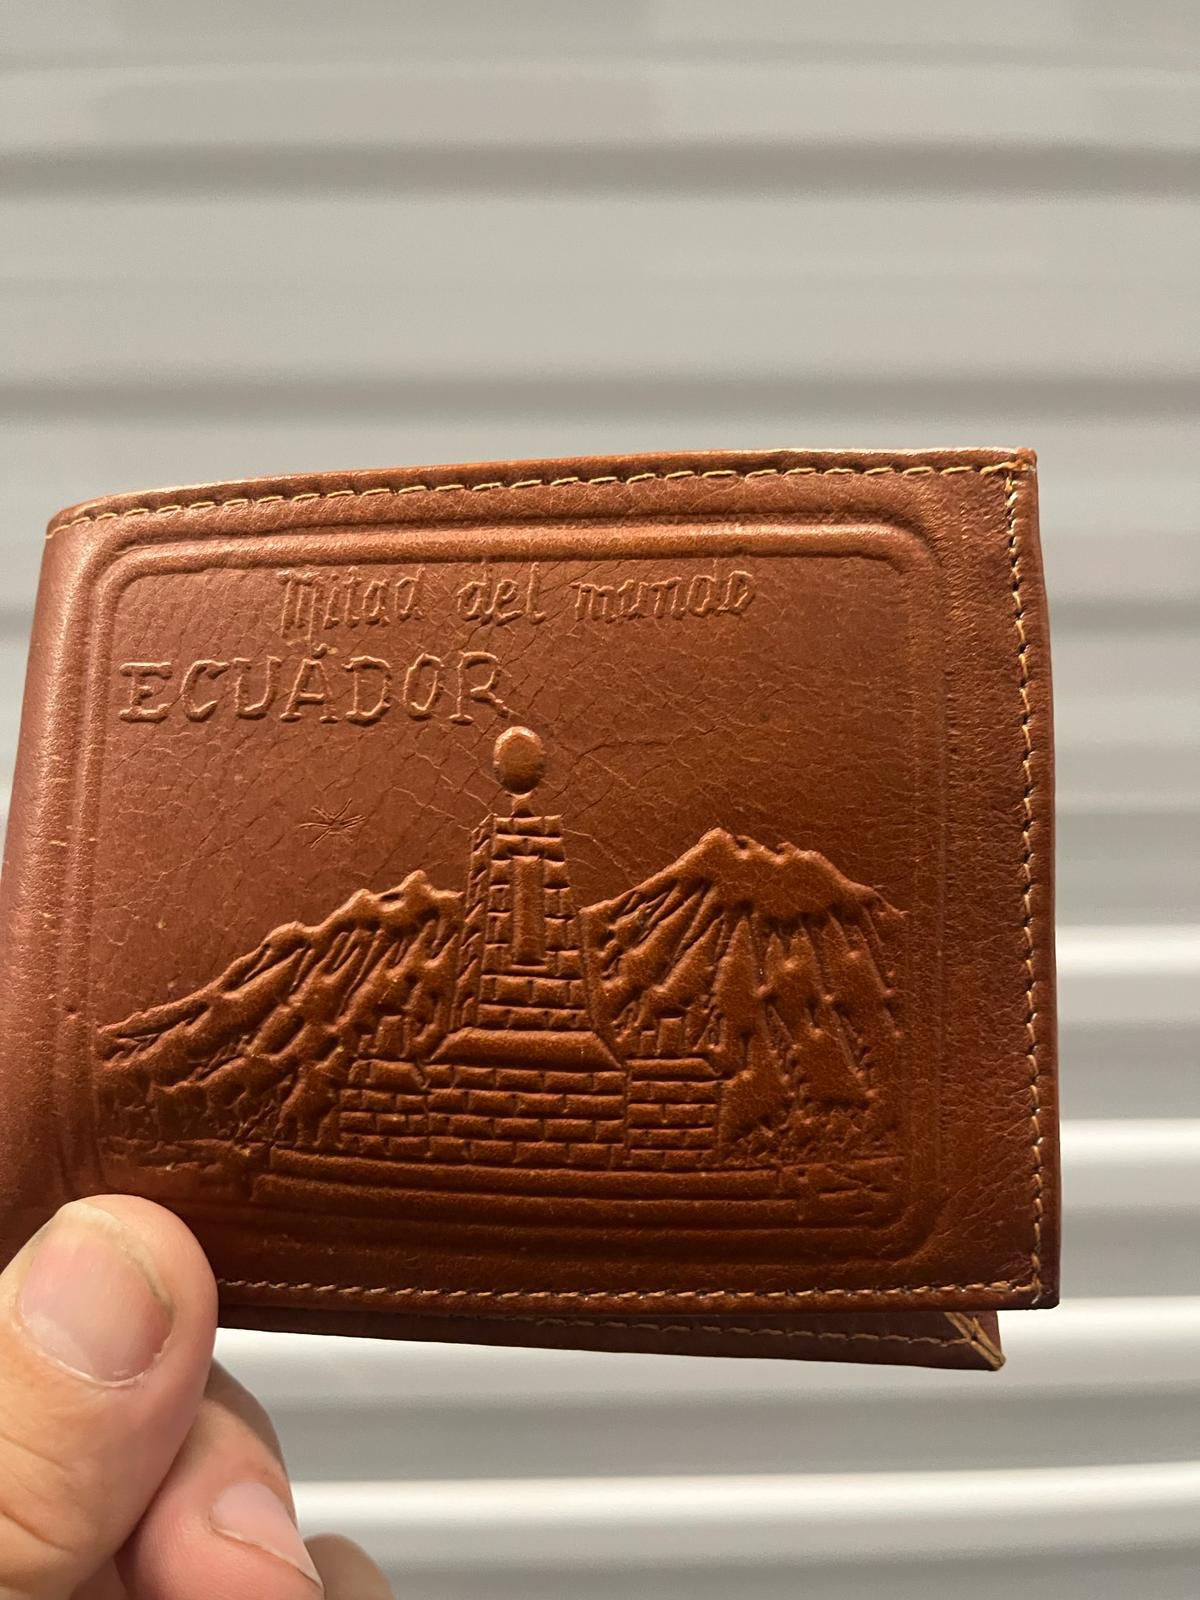 Ecuadorian leather wallet. 15 bucks.